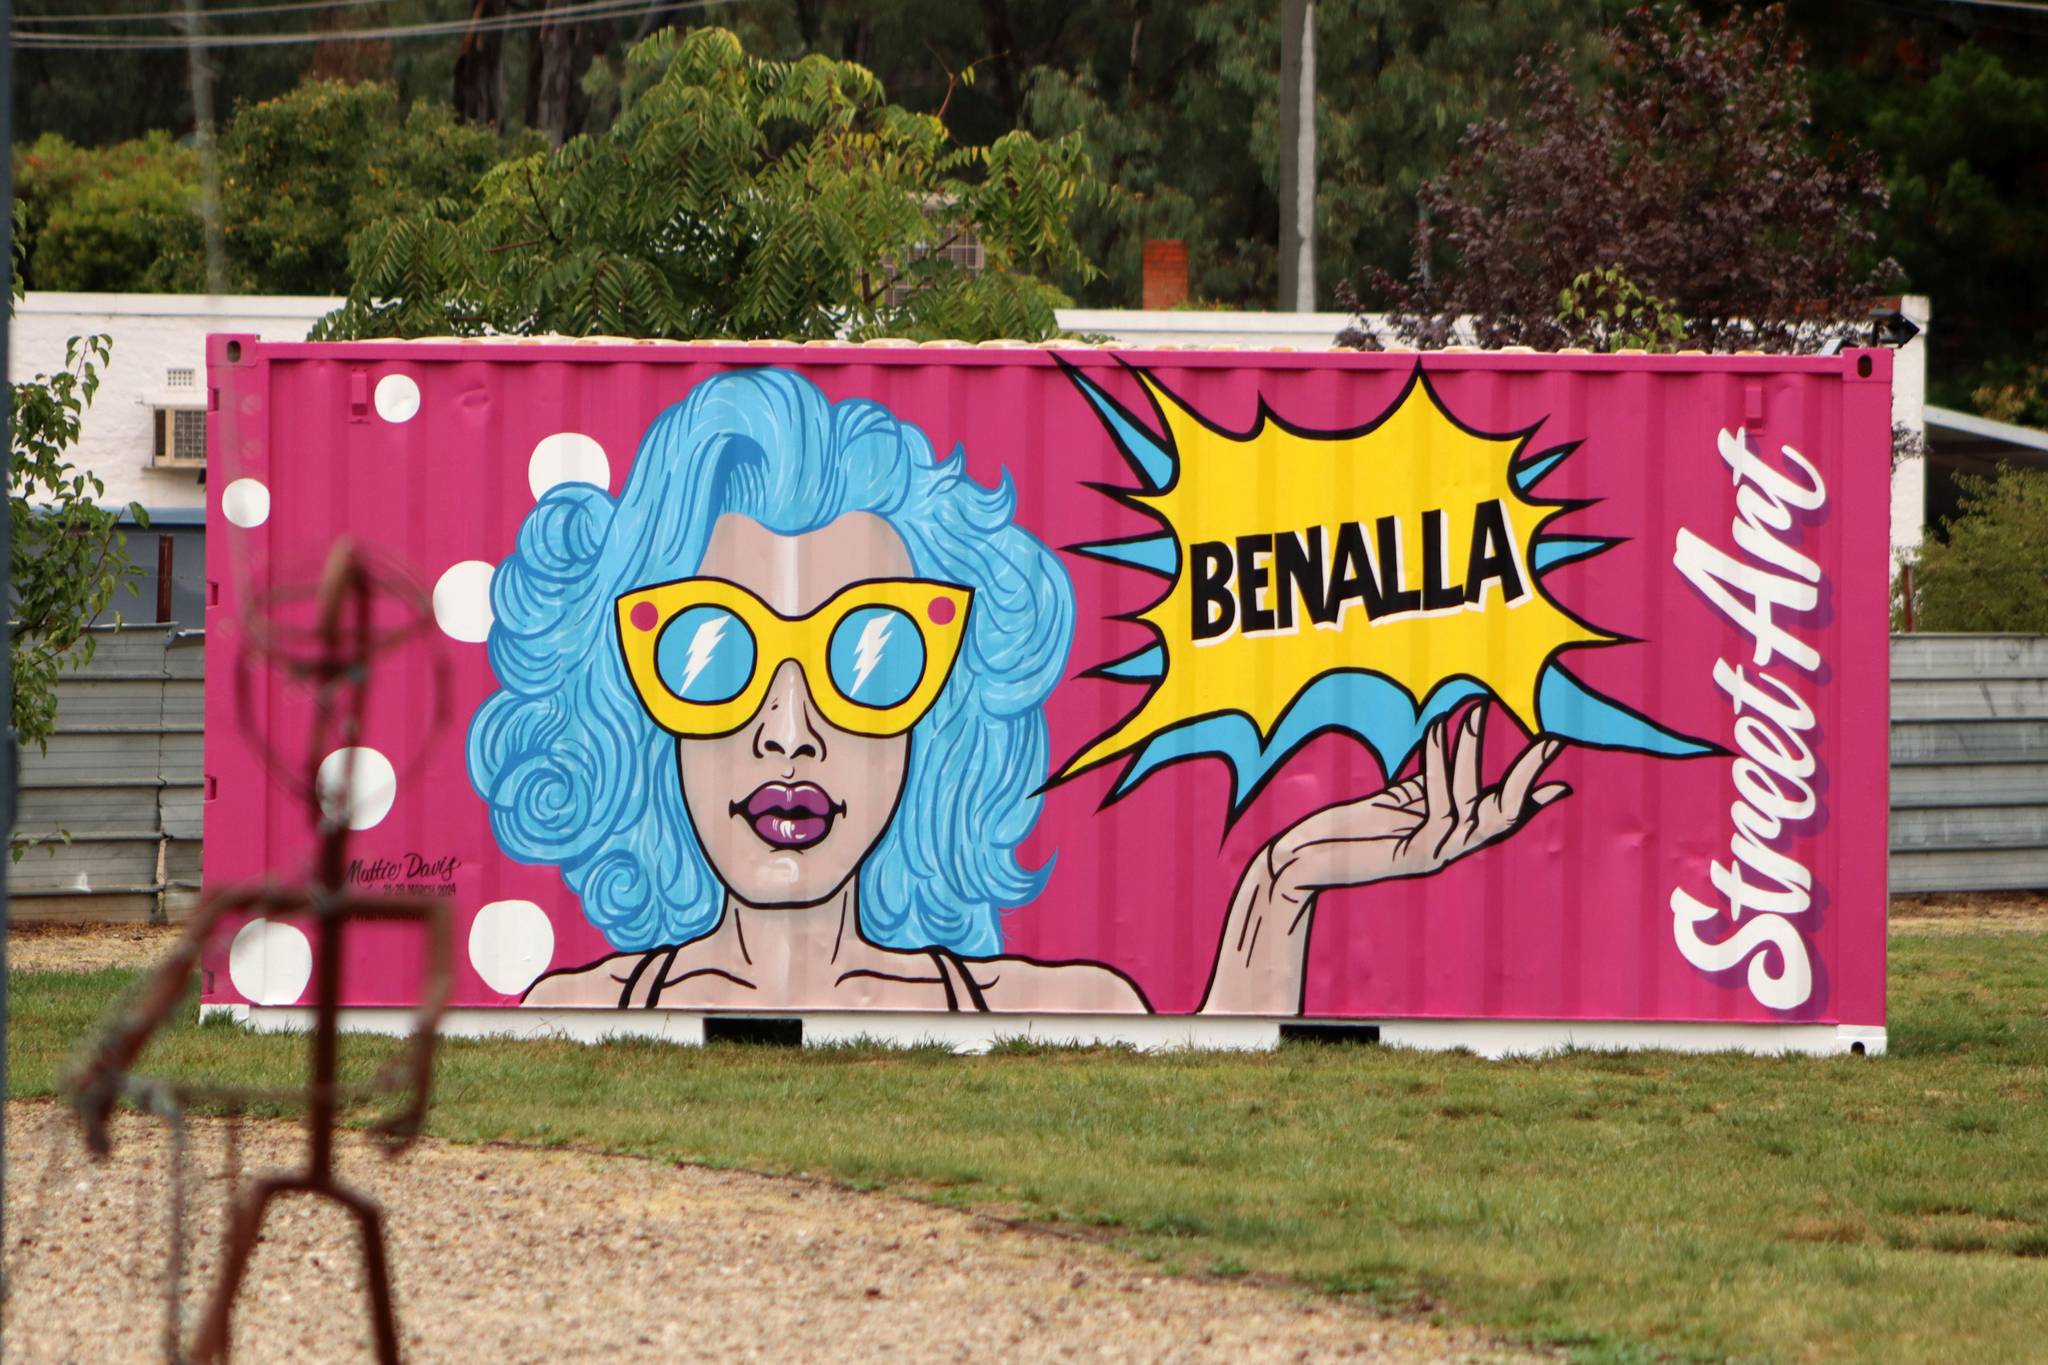 Matthew Davis&mdash;Benalla Street Art